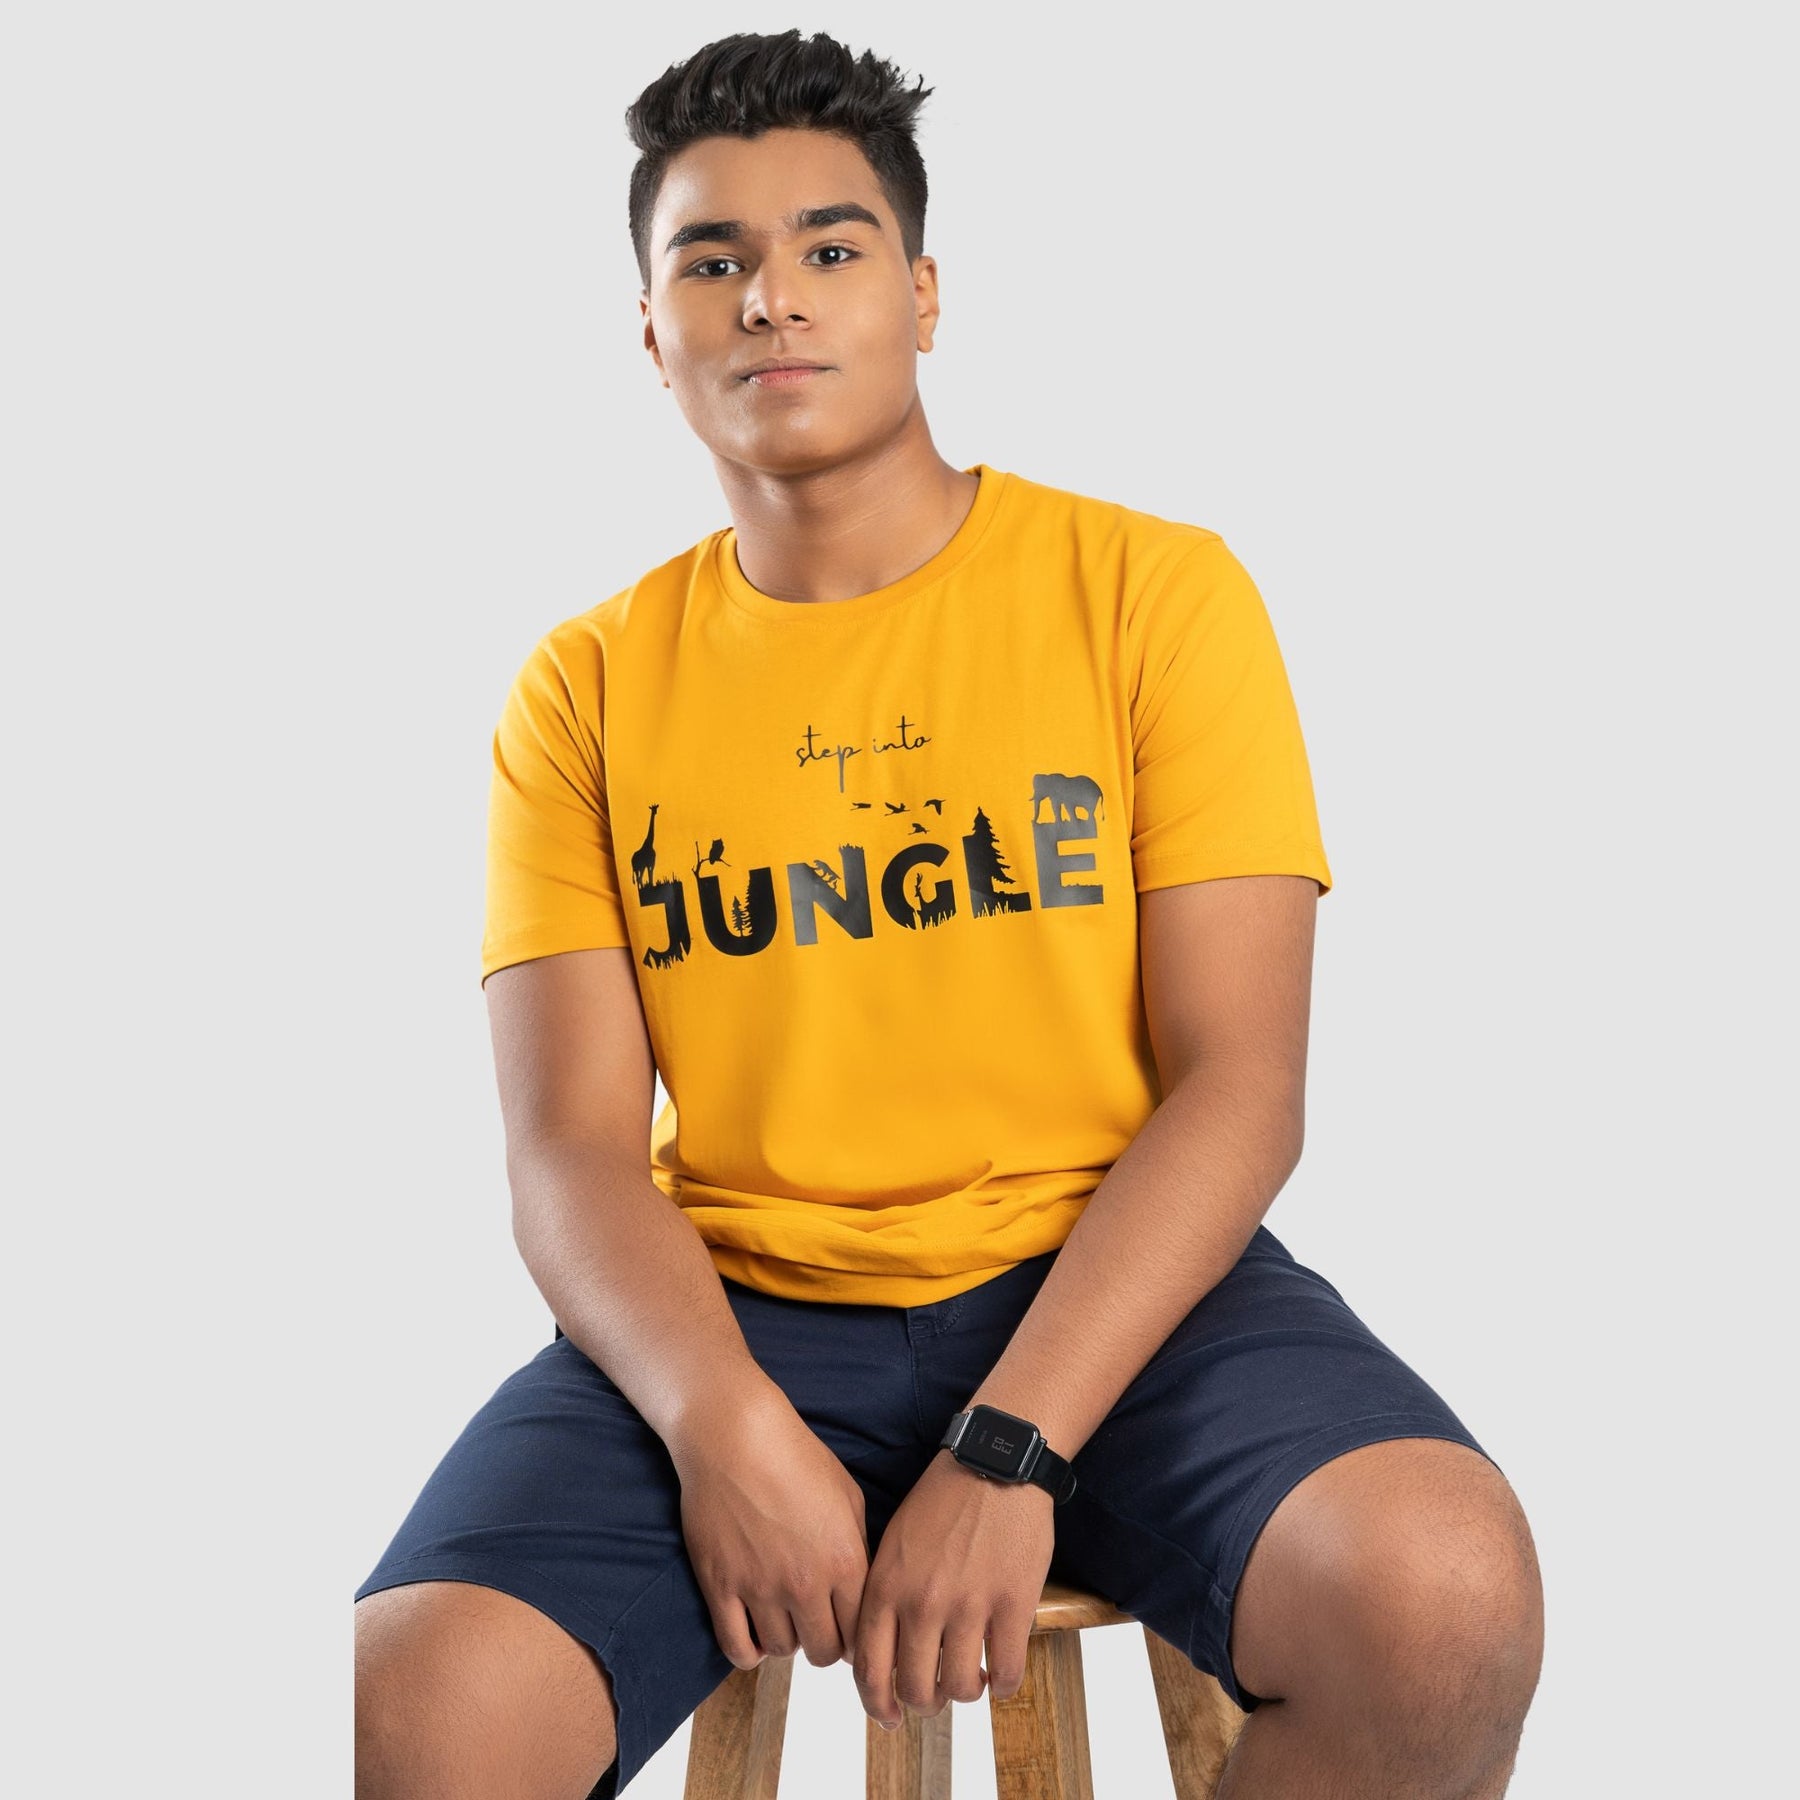 step-into-the-jungle-golden-yellow-round-neck-printed-wildlife-theme-cotton-t-shirt-gogirgit